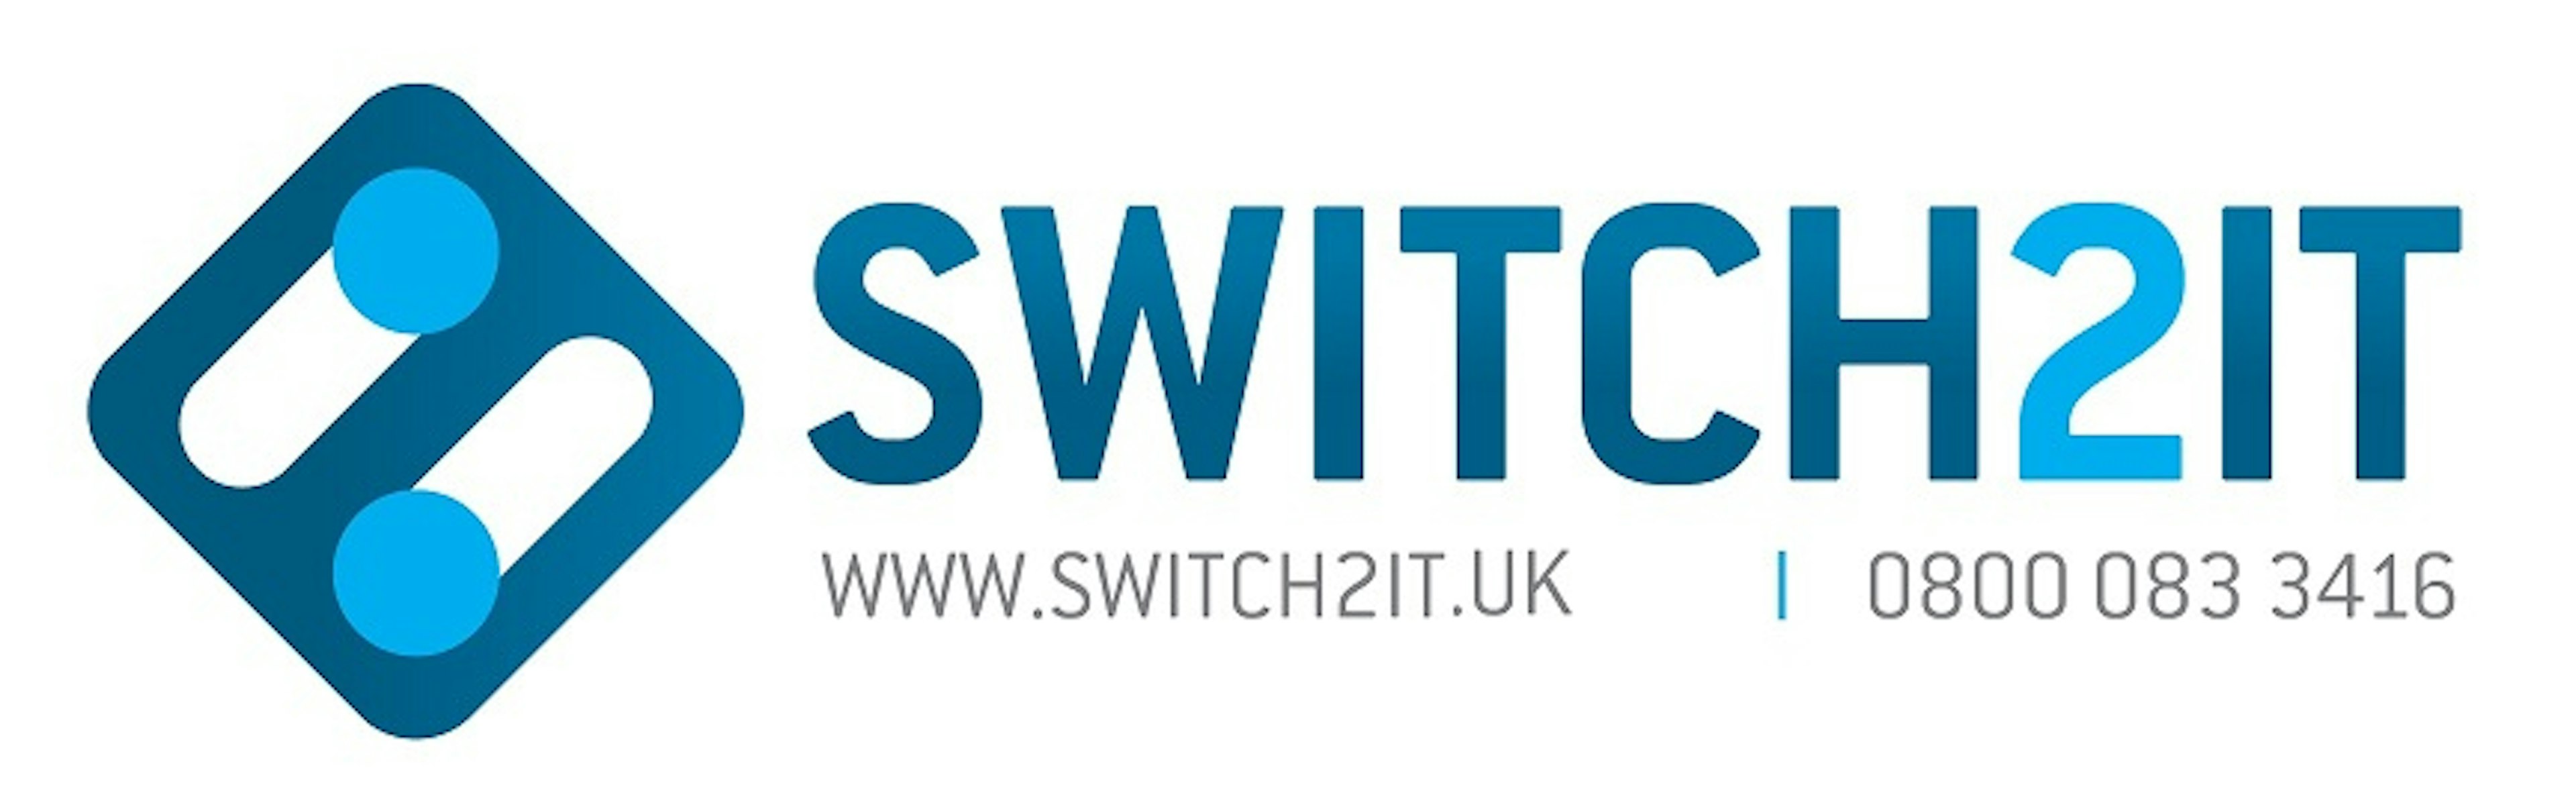 Switch2it.uk